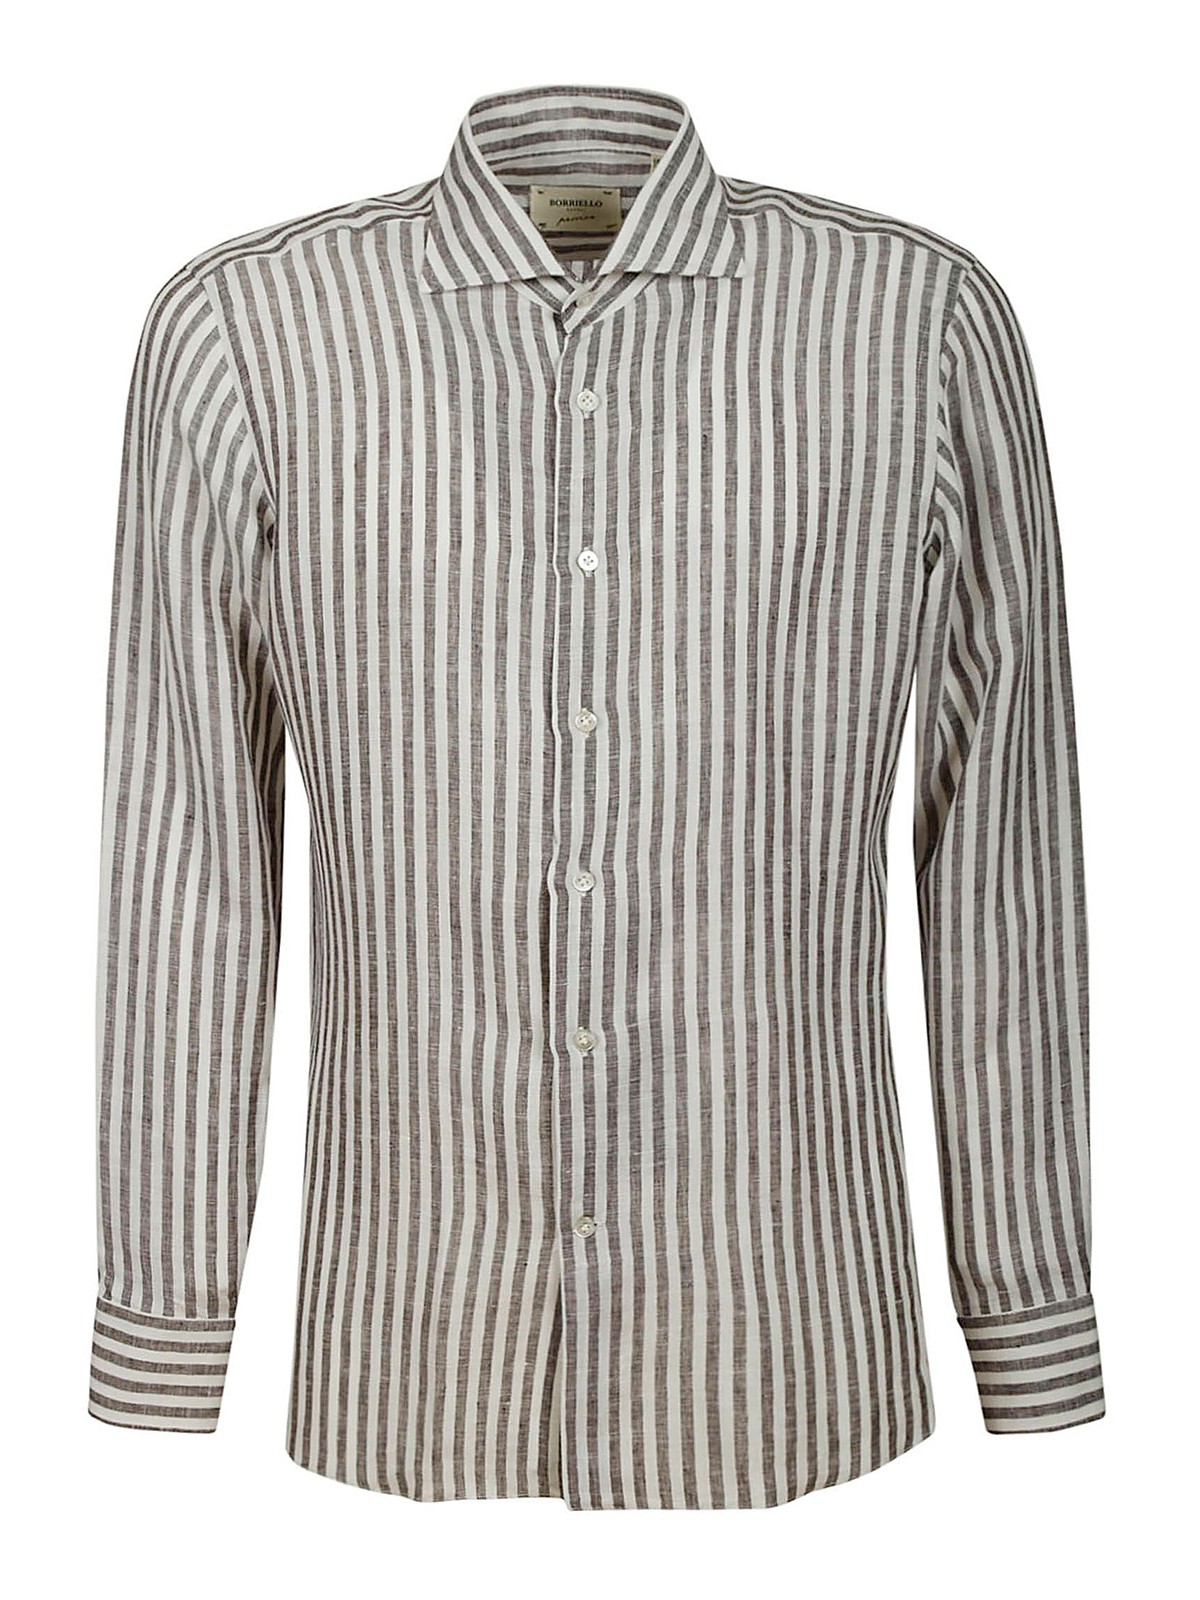 Shirts Borriello Napoli - Linen shirt - 140345 | Shop online at iKRIX